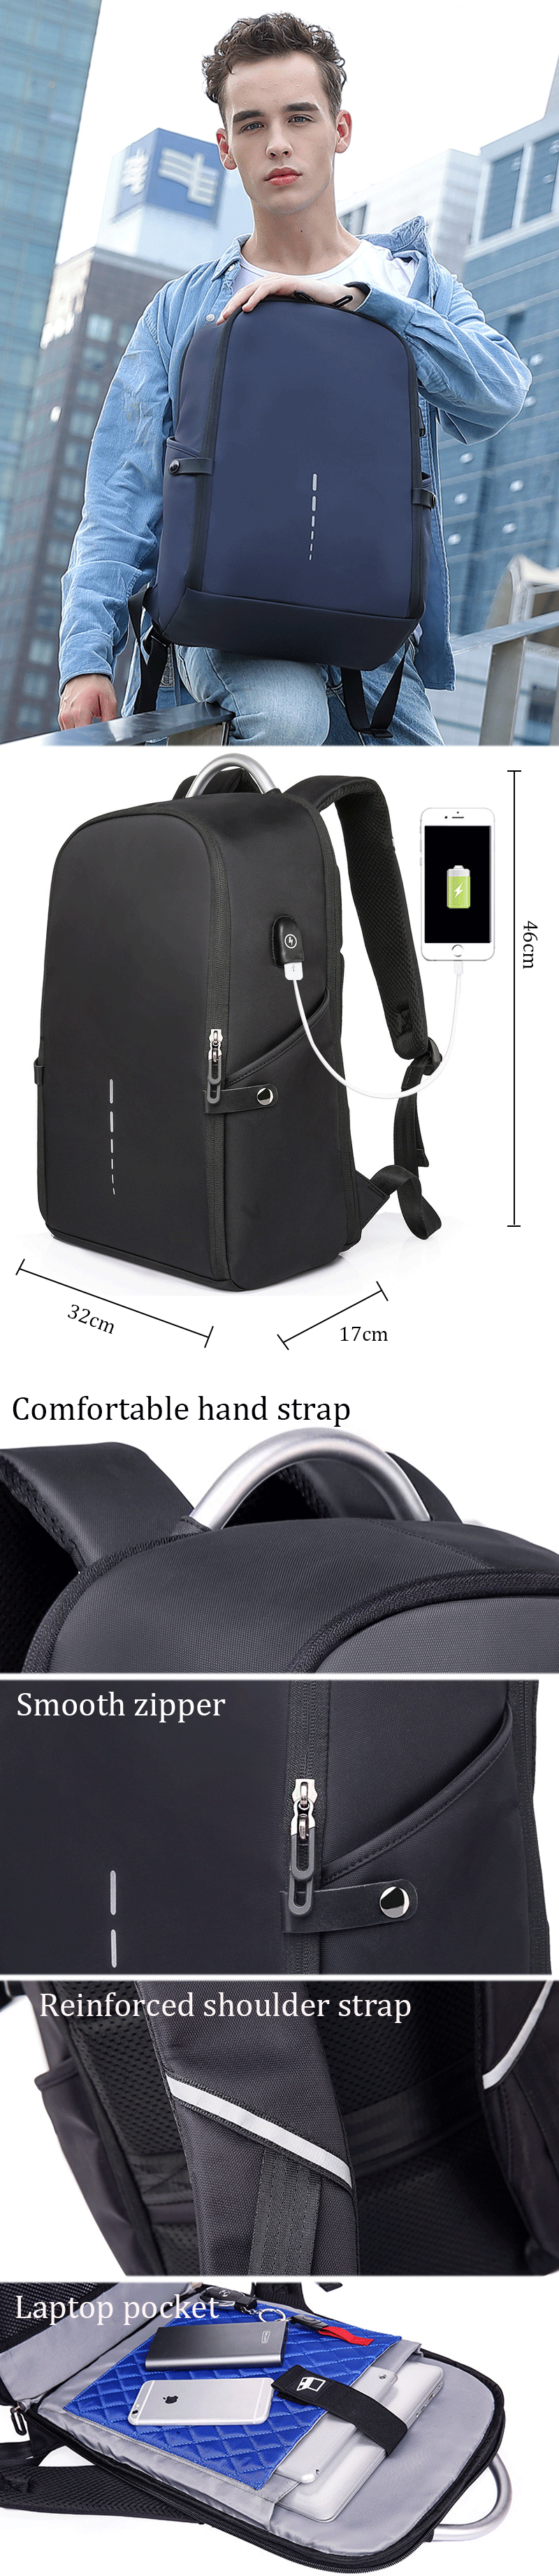 30L-USB-Backpack-Anti-thief-Shoulder-Bag-14-Inch-Laptop-Bag-Camping-Waterproof-Travel-Bag-School-Bag-1364864-1